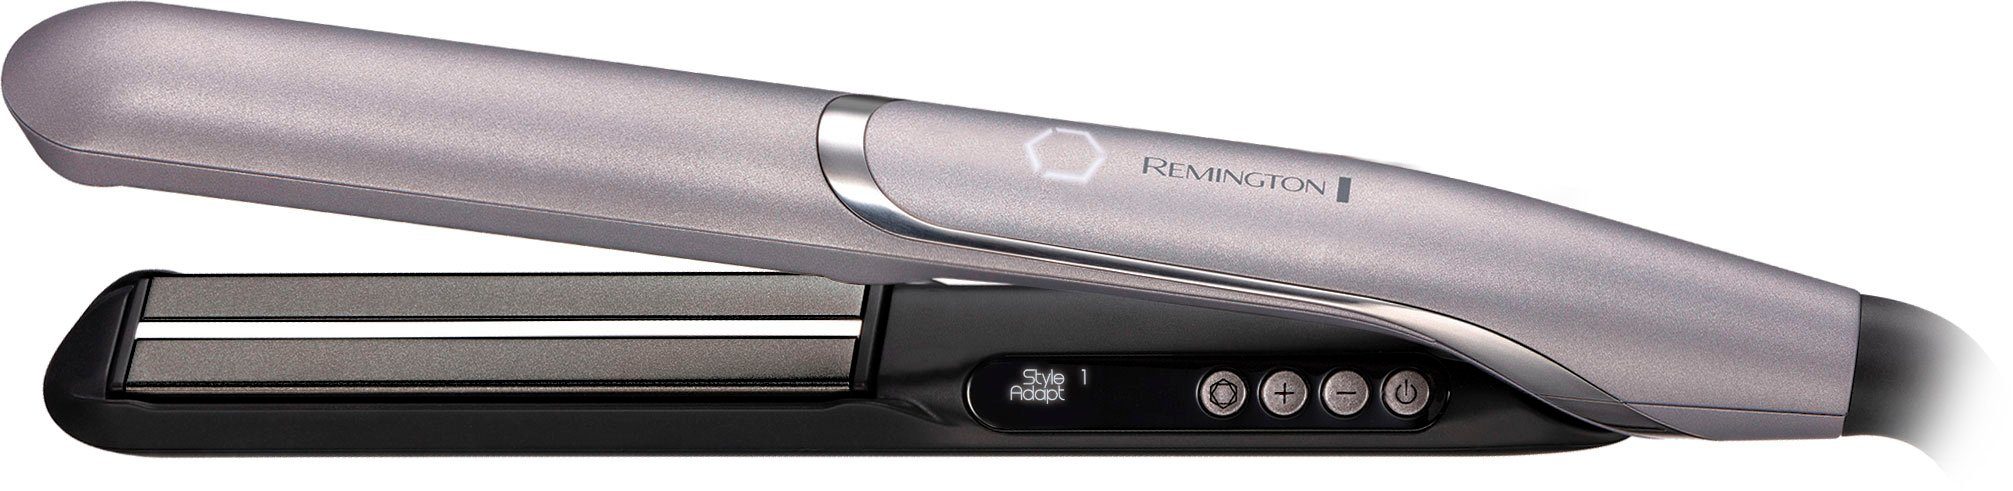 Remington Glätteisen PROluxe You™ S9880 Keramik-Beschichtung, lernfähiger Haarglätter, Memory Funktion, 2 StyleAdapt™ Nutzerprofile | Glätteisen